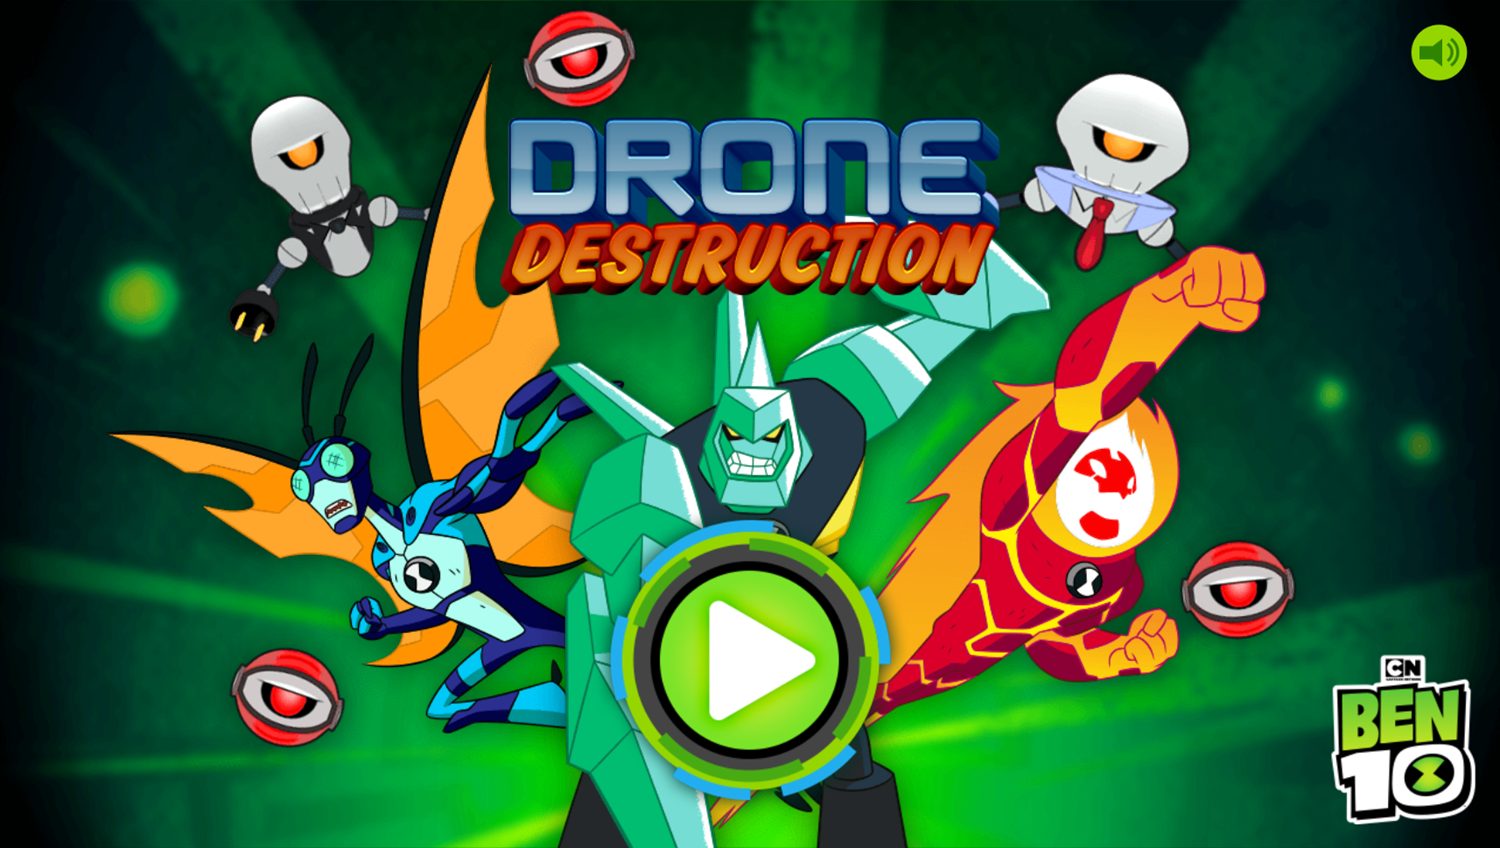 Ben 10 Drone Destruction Game Welcome Screen Screenshot.